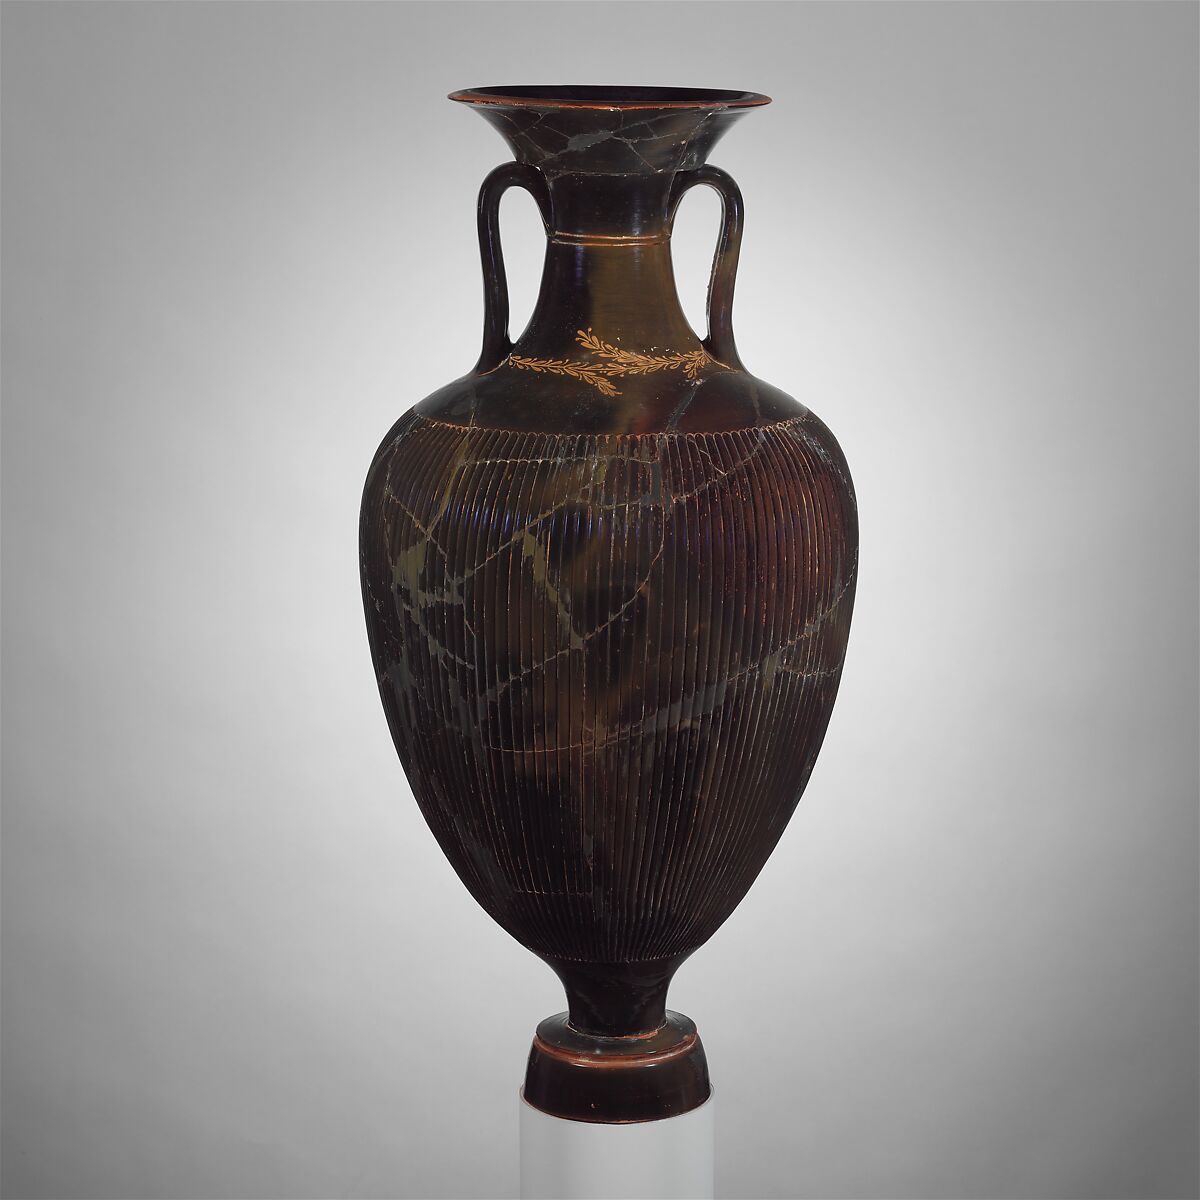 Terracotta amphora (jar), Terracotta, Greek, South Italian, Apulian 